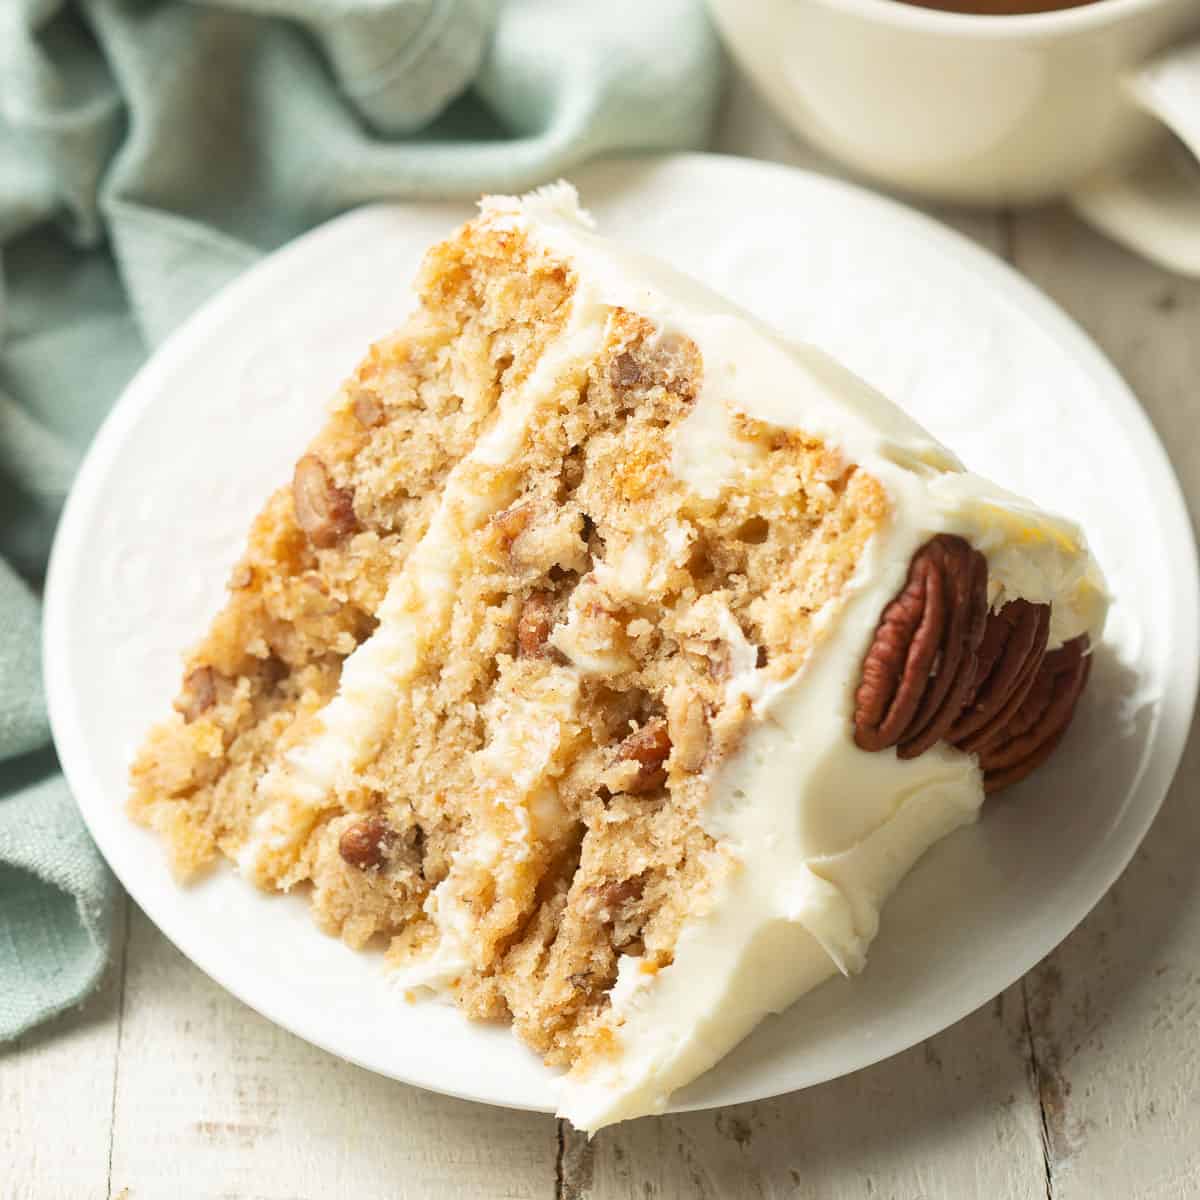 Vegan Hummingbird Cake